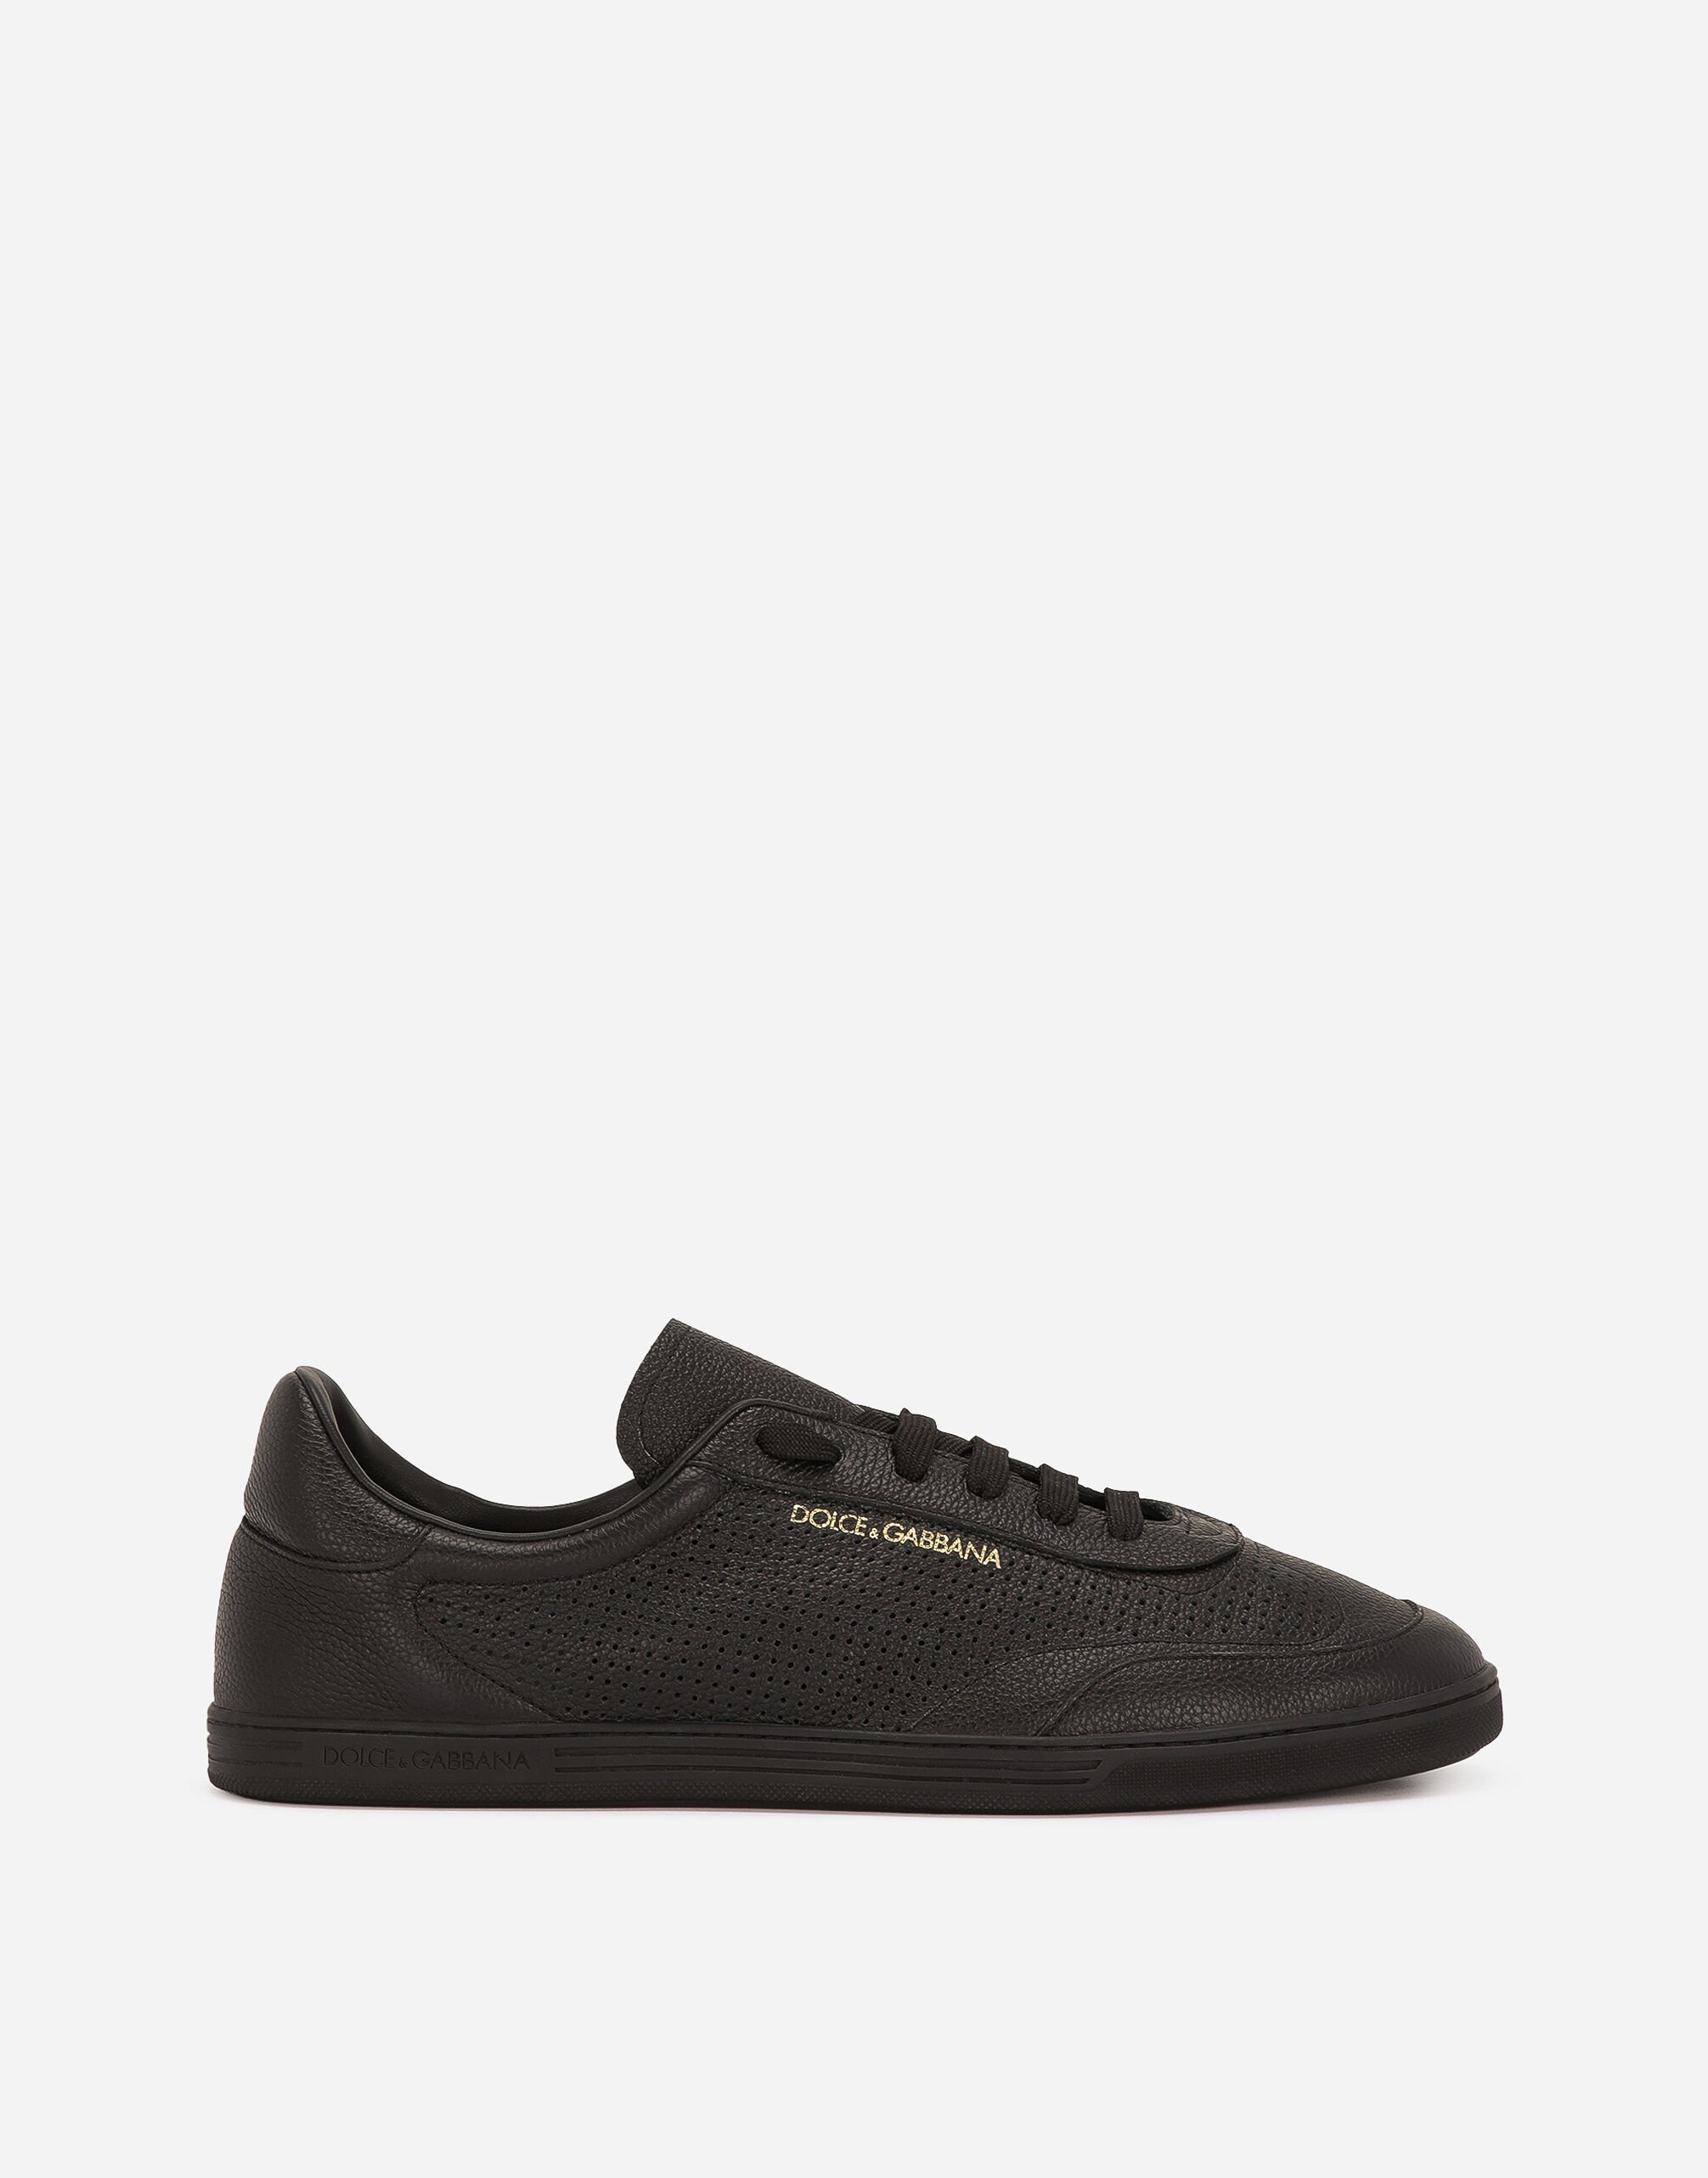 Dolce & Gabbana Perforated calfskin Saint Tropez sneakers Black CS1772AT390